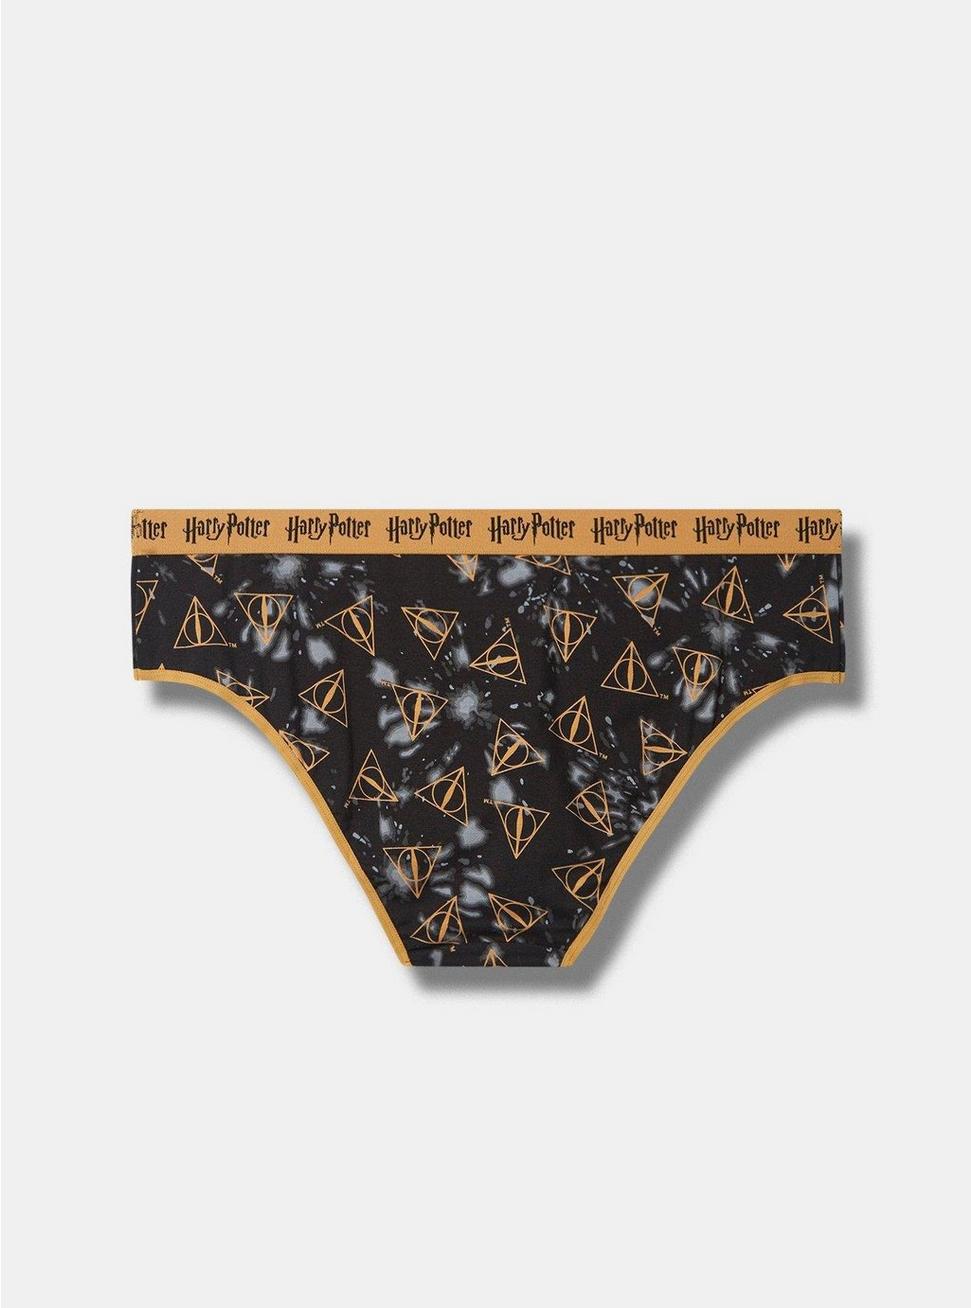 Torrid Boyshort Panties Underwear Harry Potter Slytherin Plaid Plus Size 3  22 24